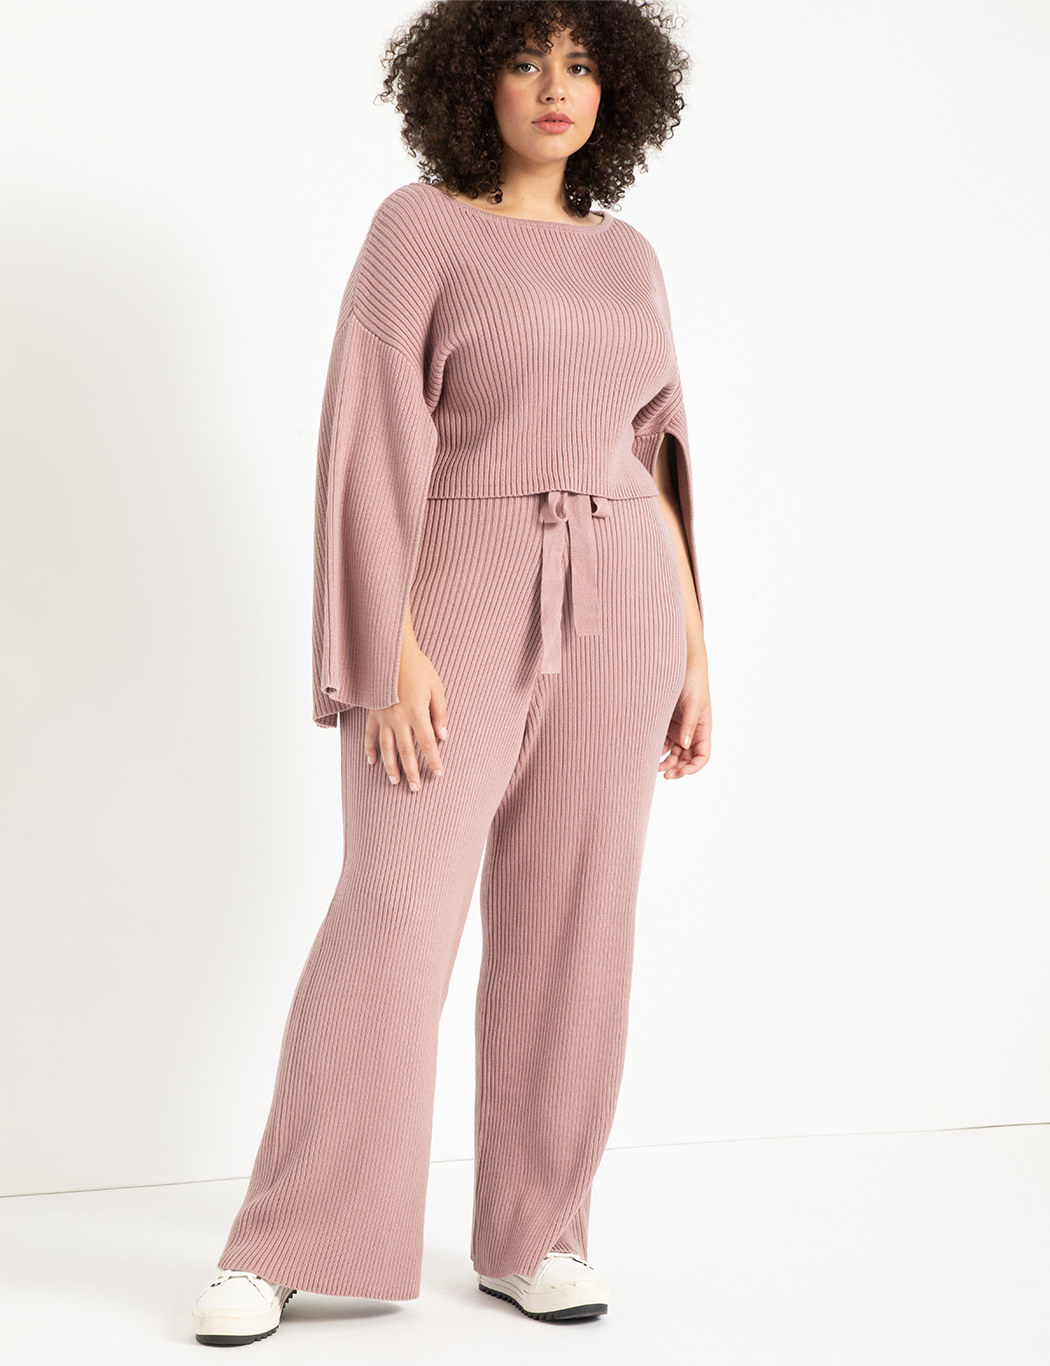 model wearing blush pink wide-leg sweater pants